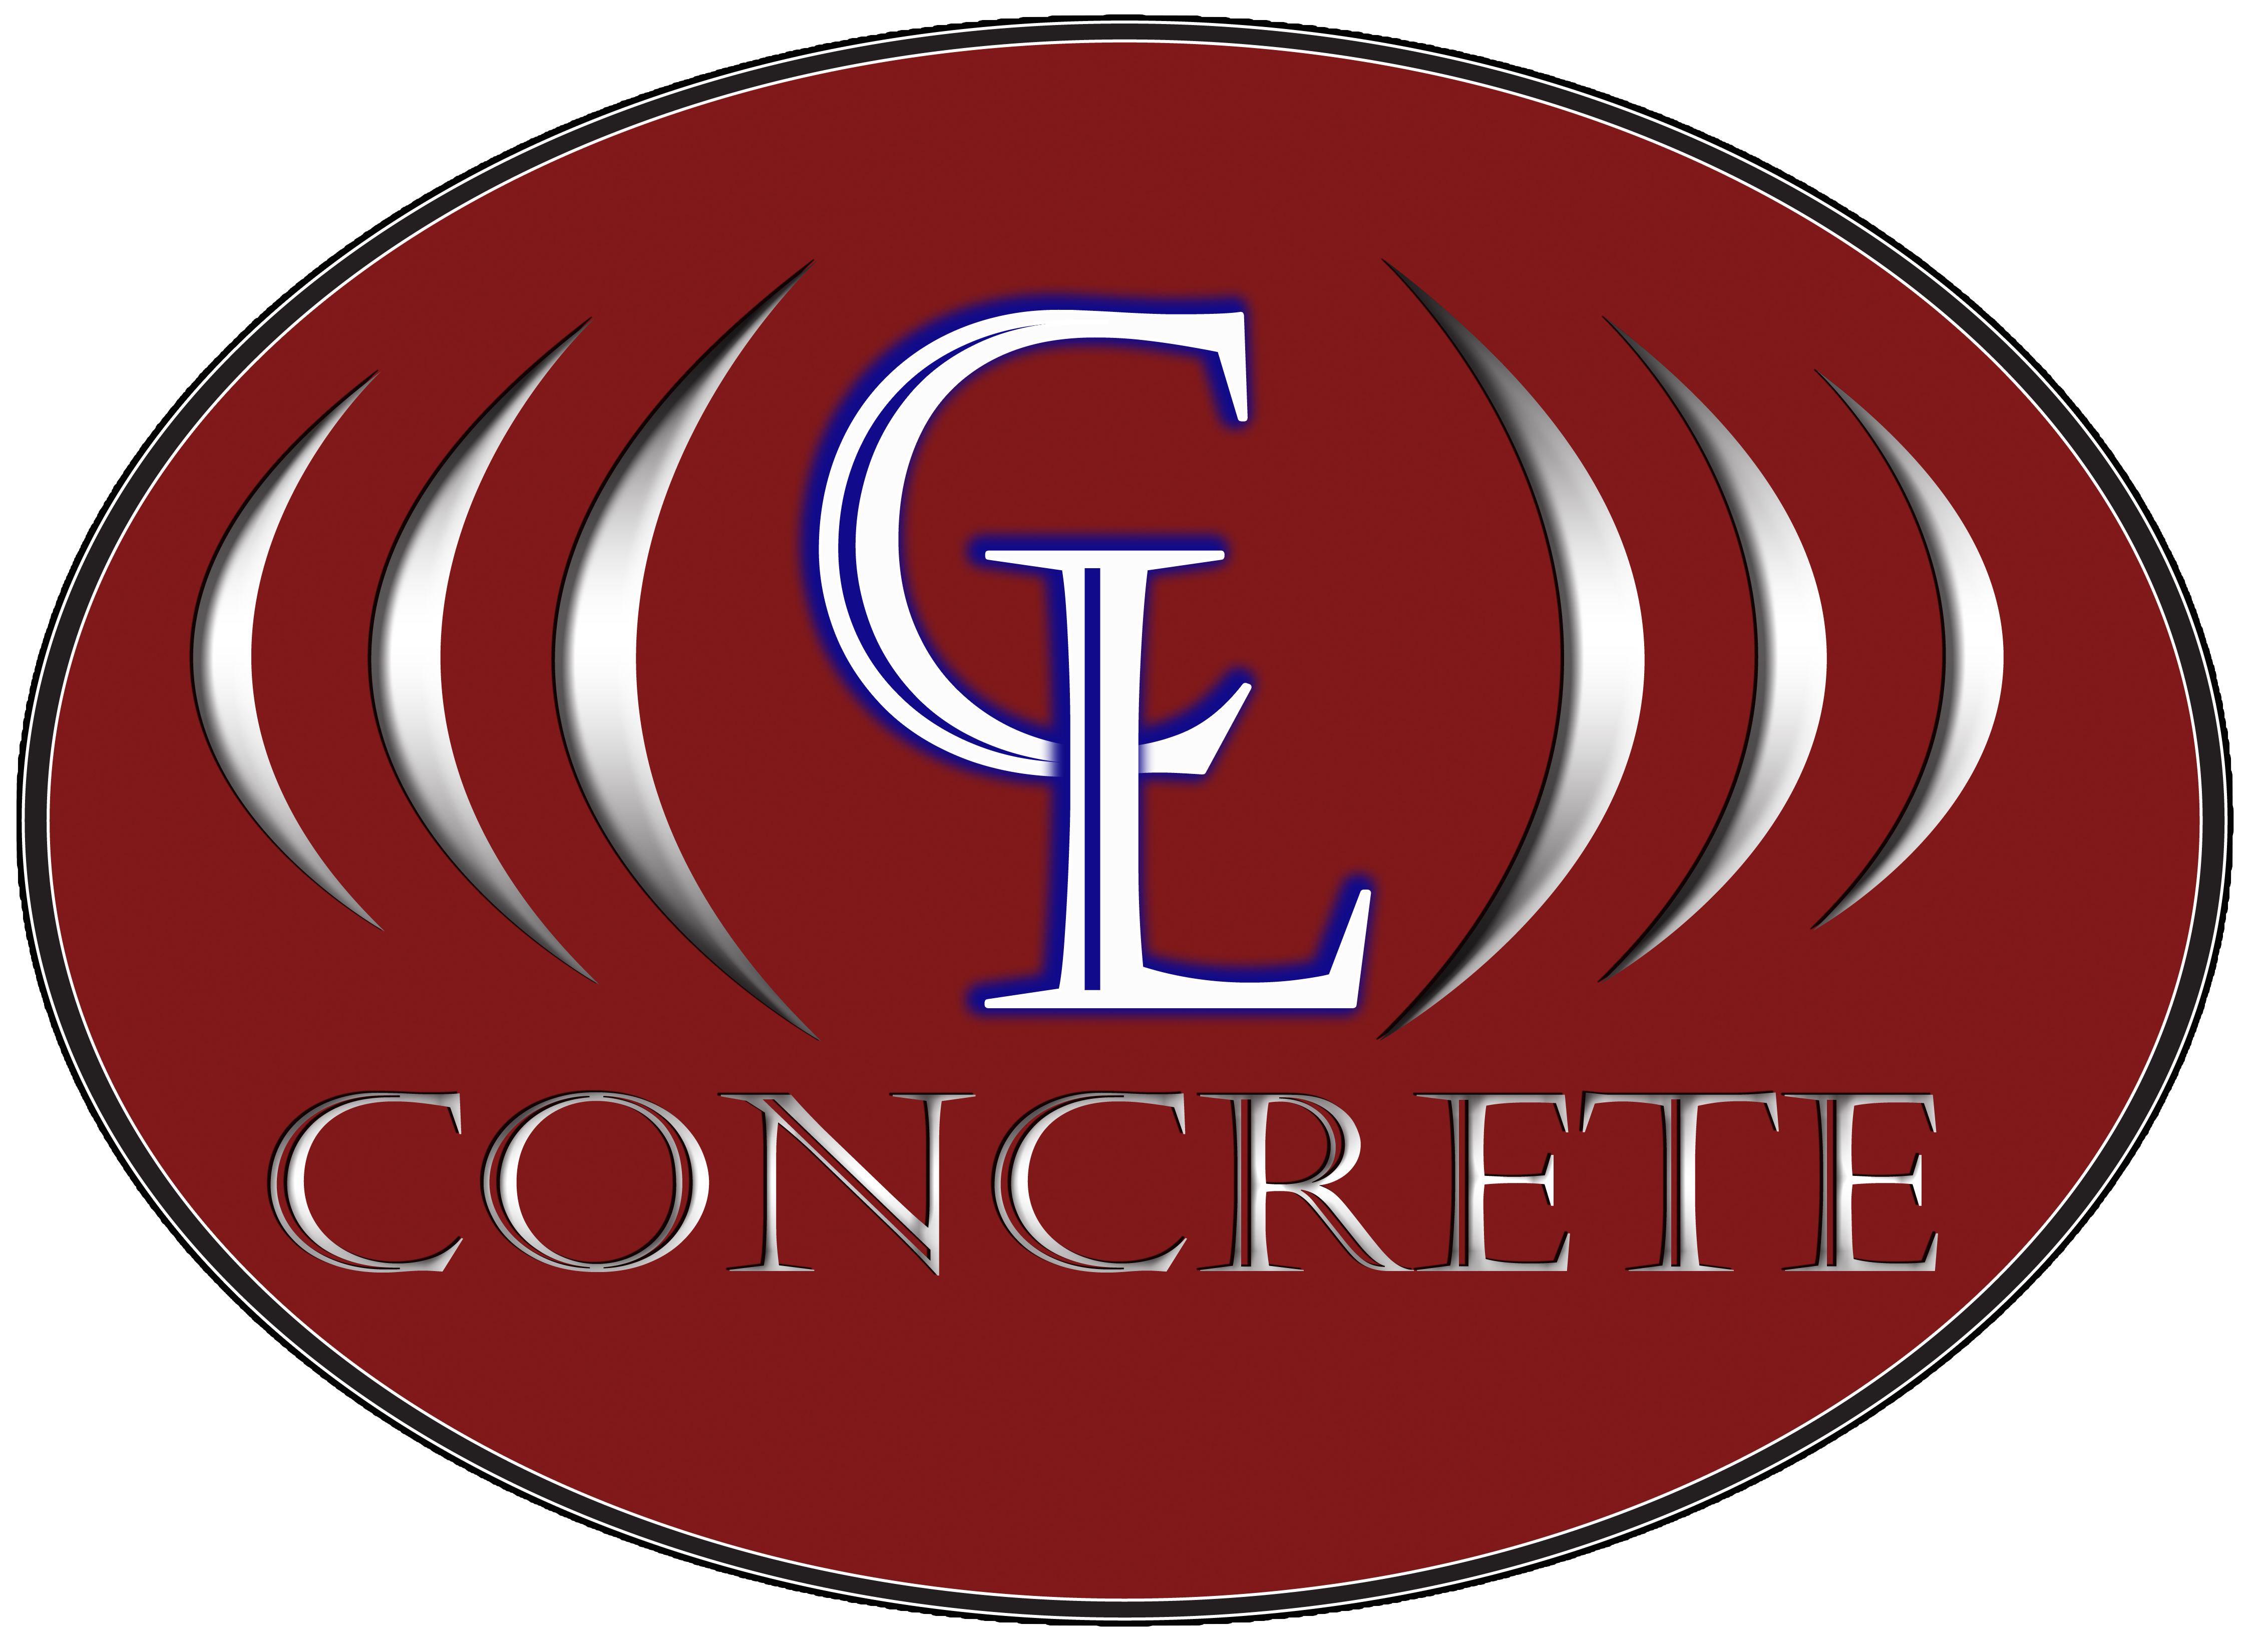 CL Concrete Logo